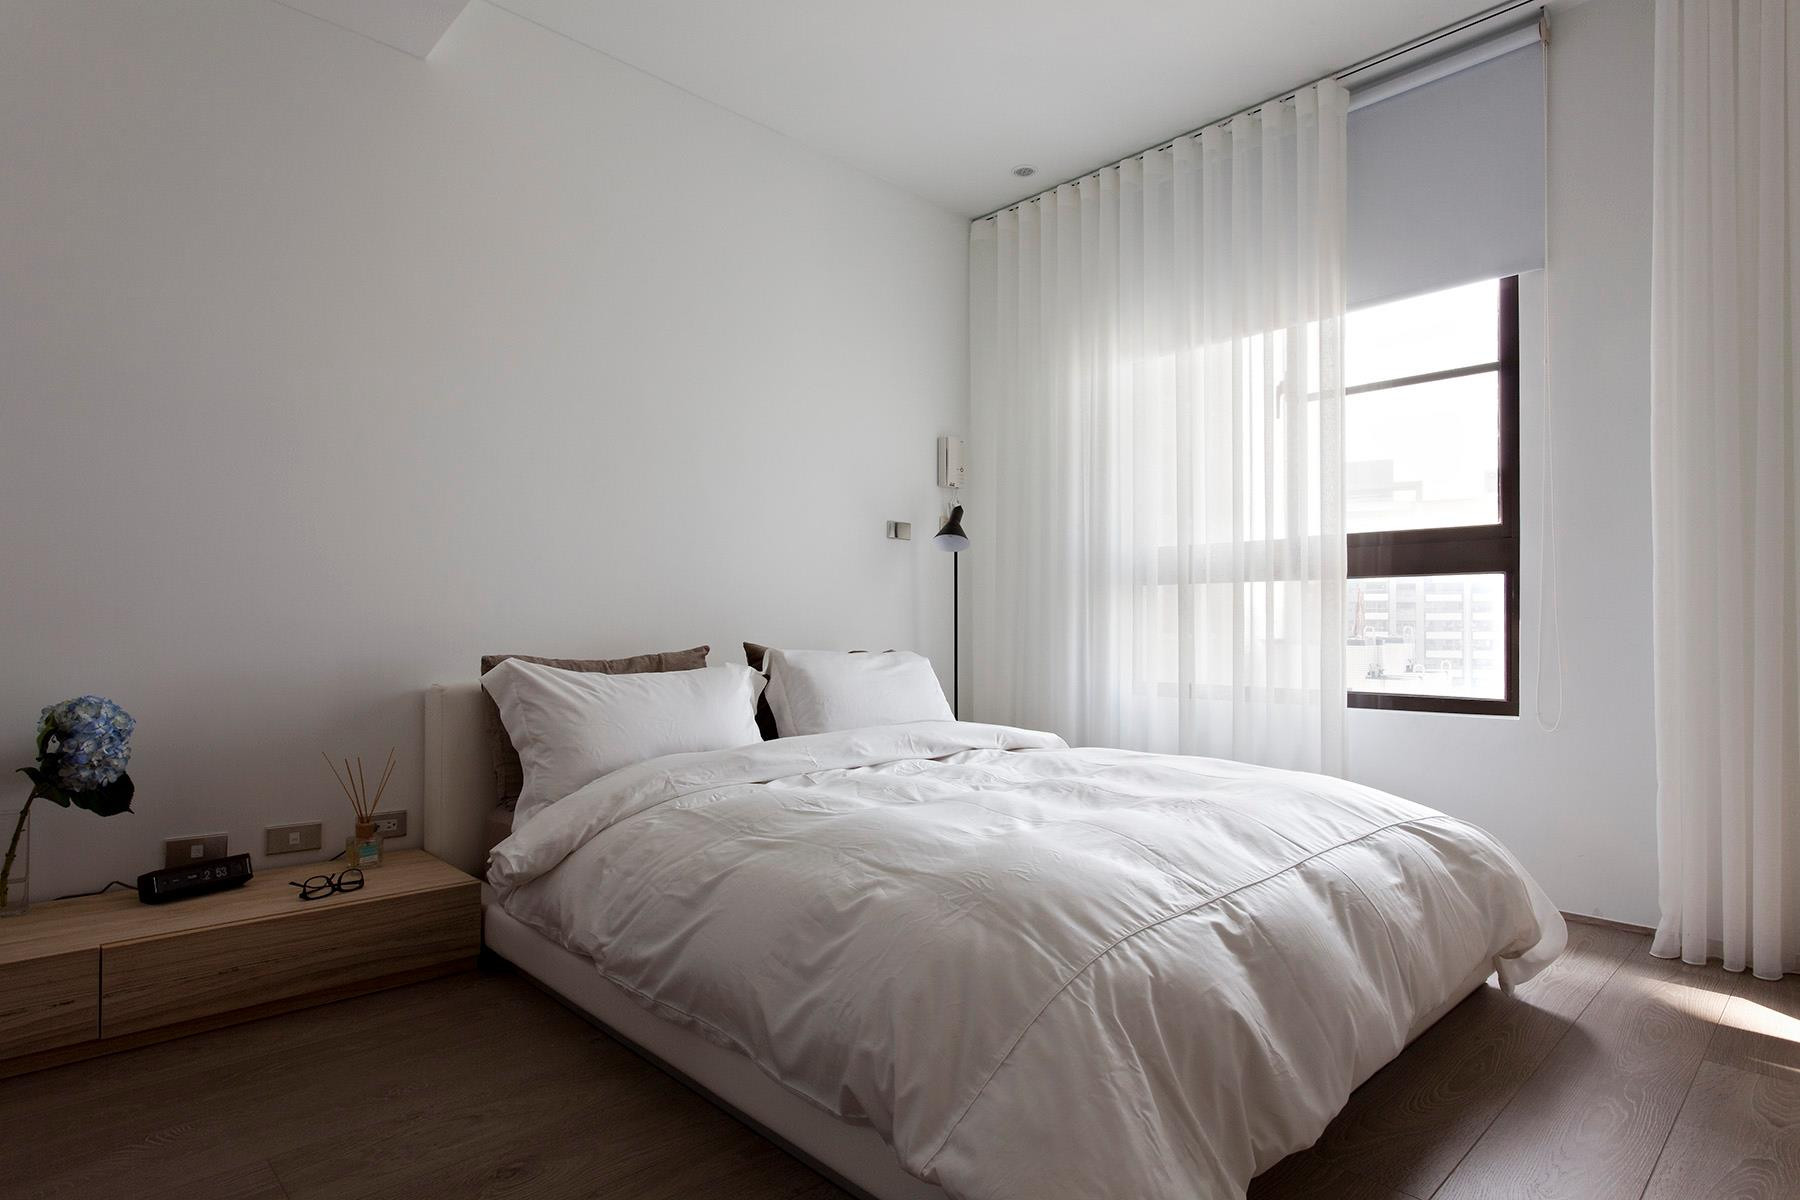 Best ideas about Interior Design Bedroom
. Save or Pin 41 White Bedroom Interior Design Ideas & Now.